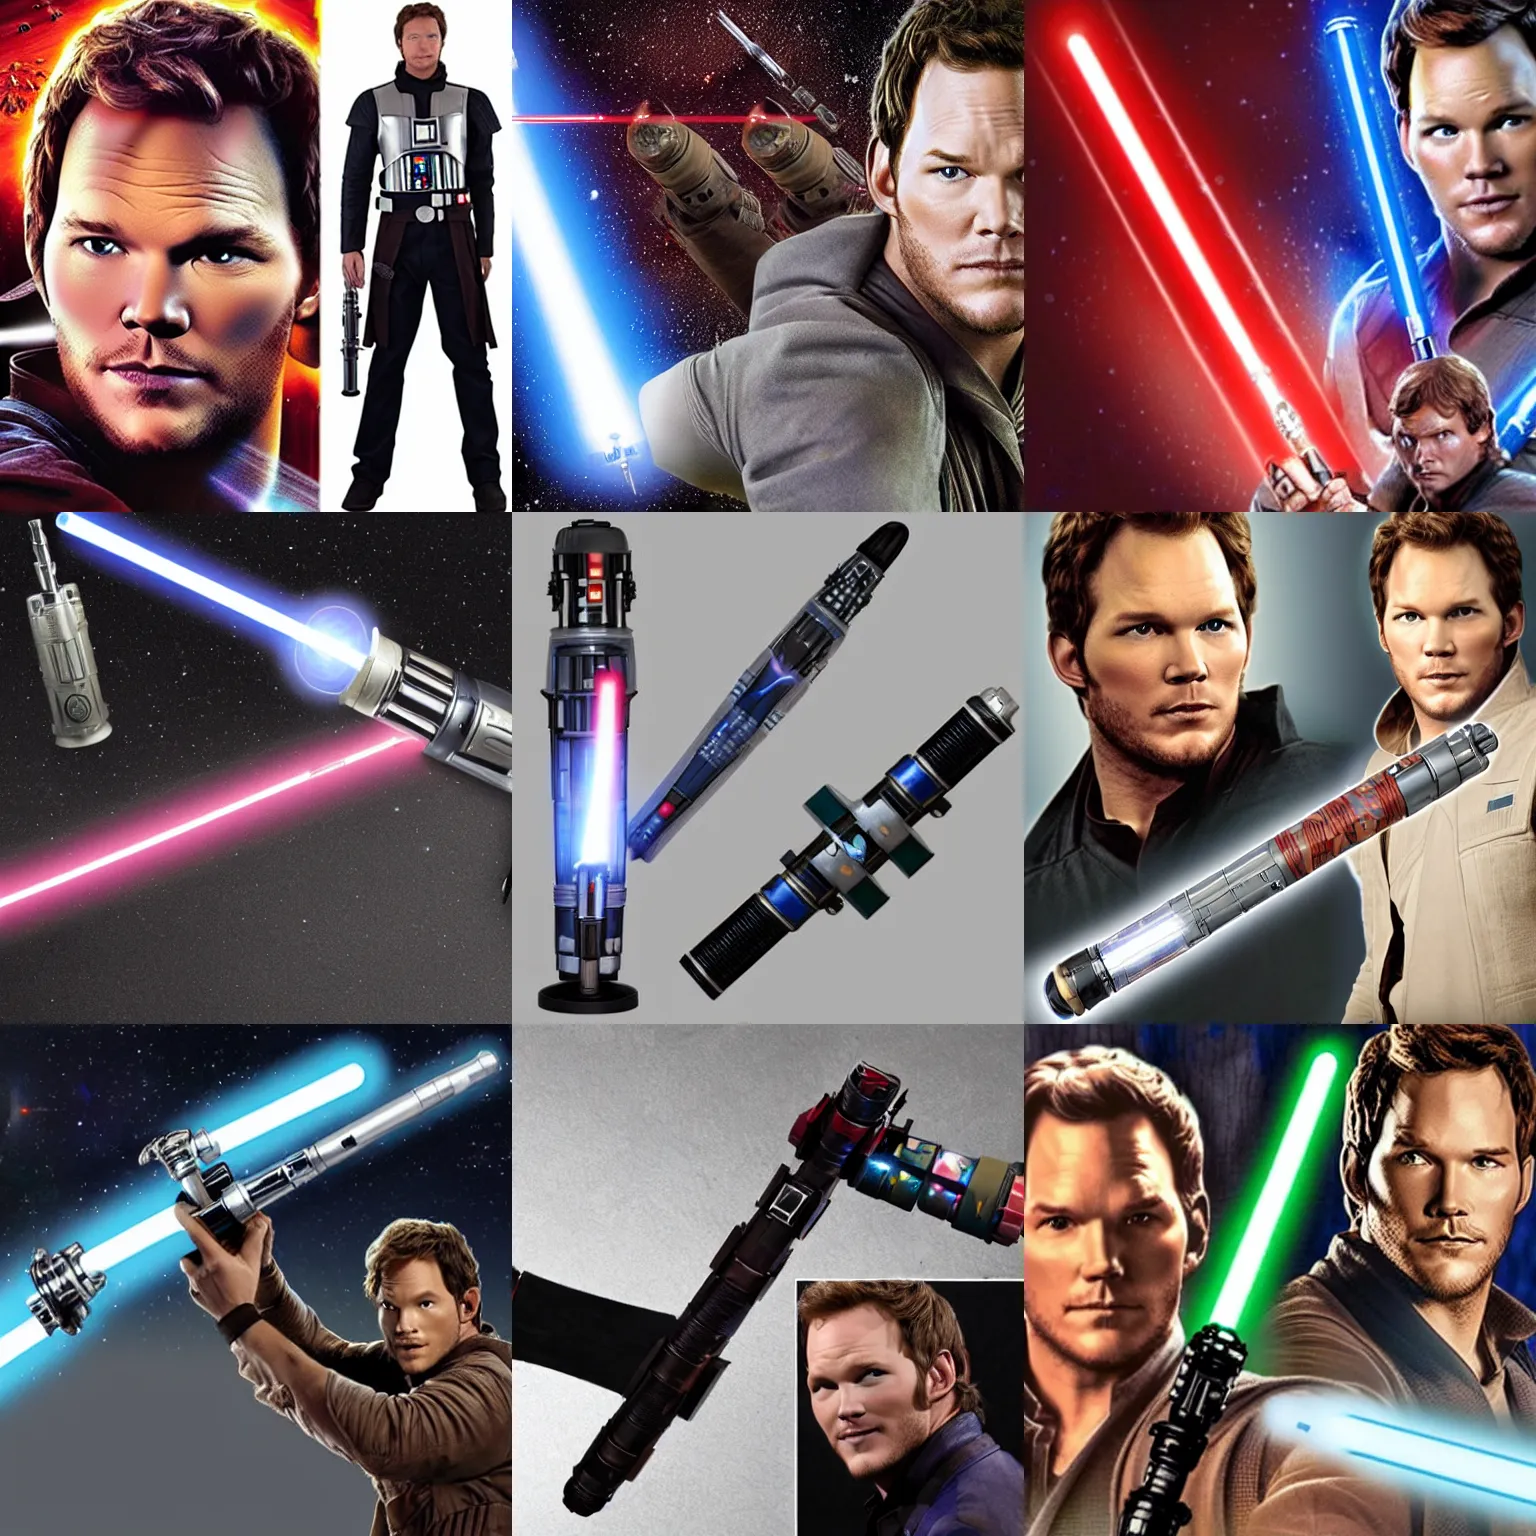 Prompt: Chris Pratt Star Wars jedi lightsaber